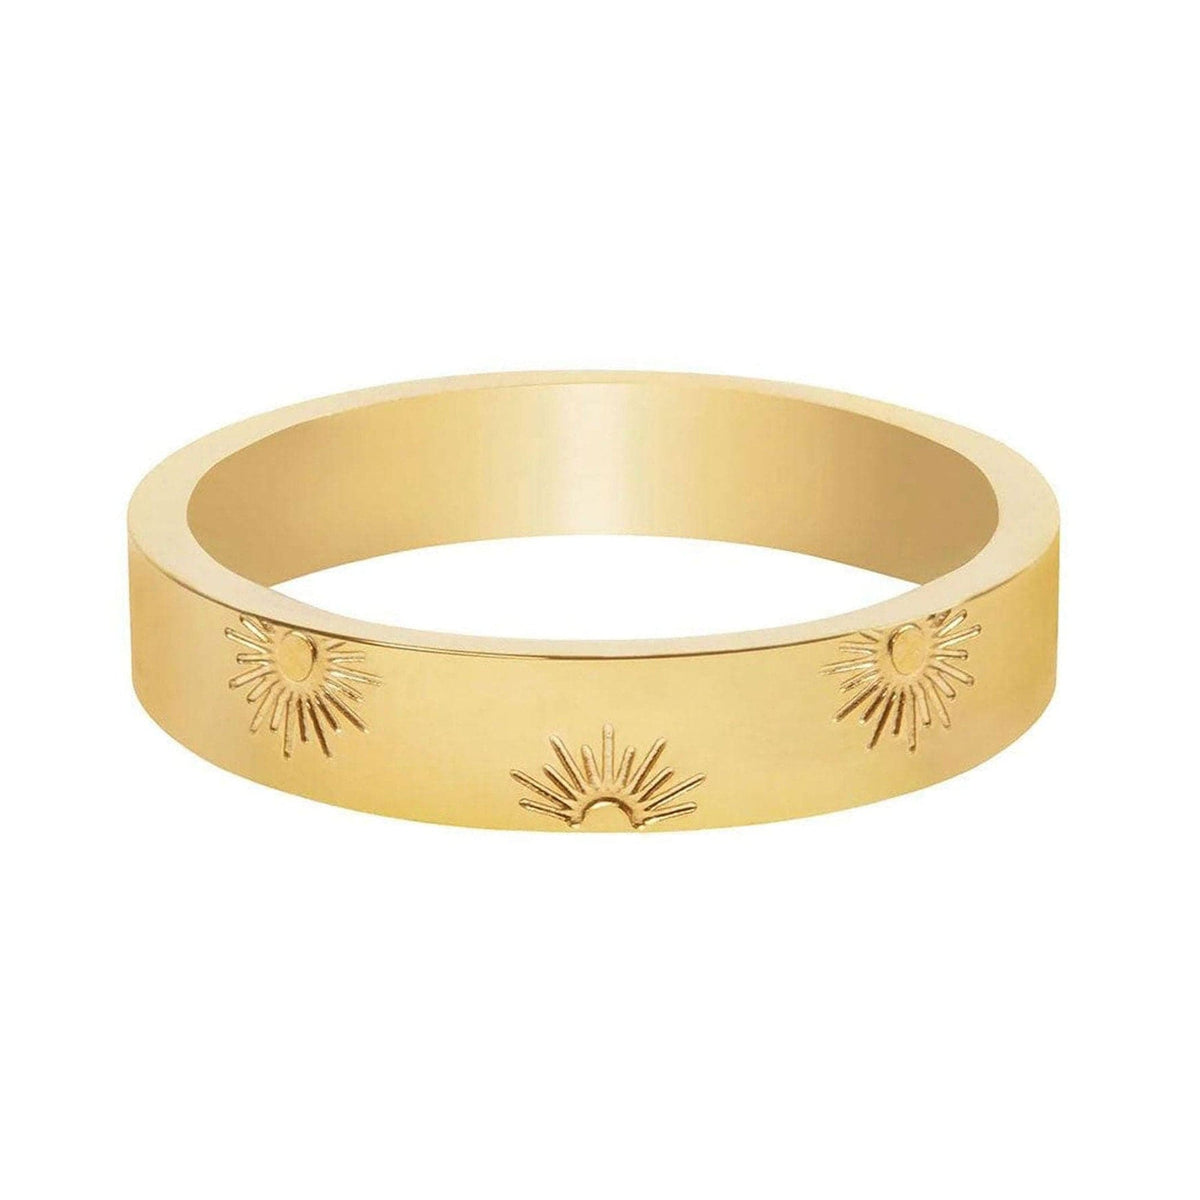 BohoMoon Stainless Steel Sunbeam Ring Gold / US 4 / UK H / EUR 46 / (xxsmall)